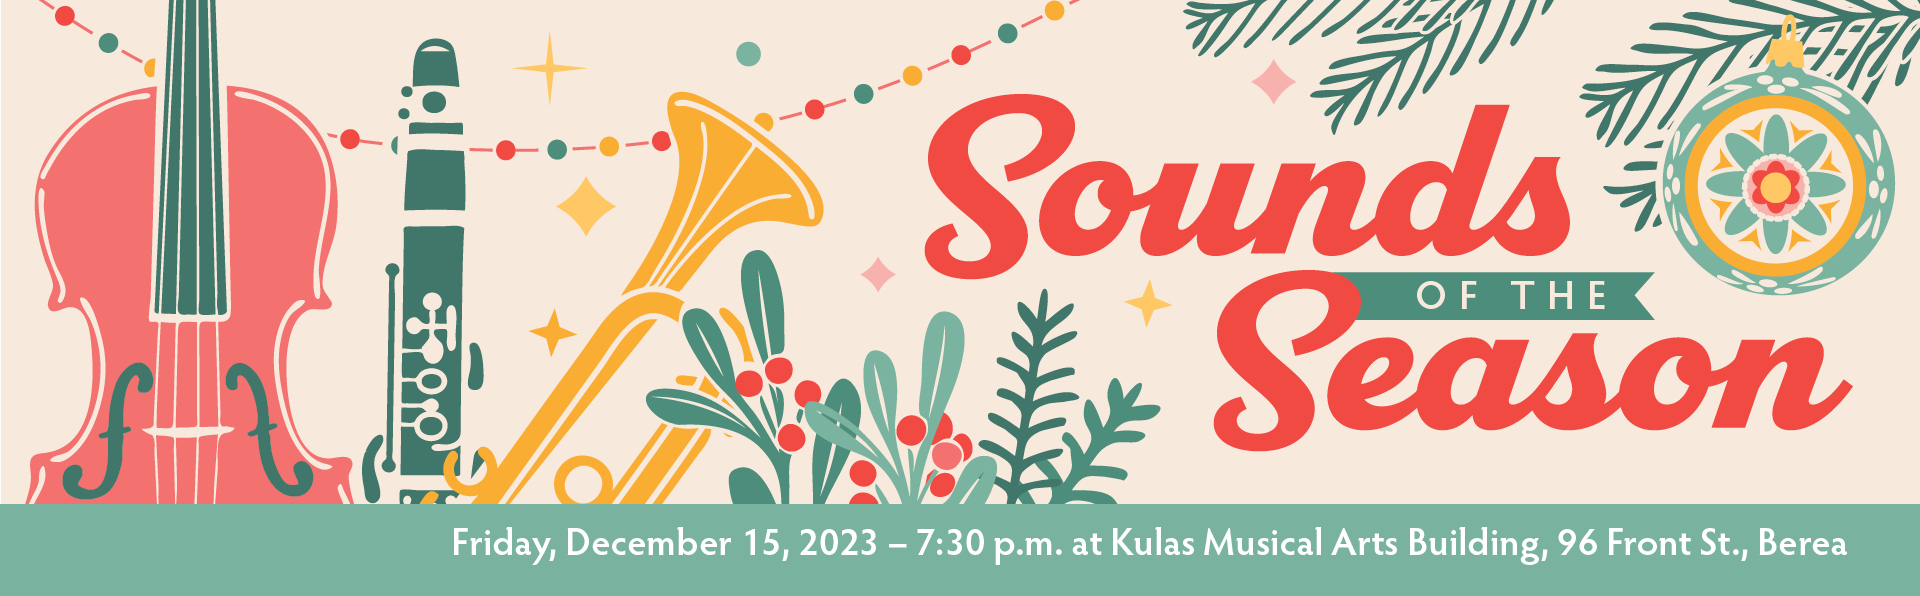 Sounds of the Season, Friday December 15 at 7:30 p.m. at Balwin Wallace University